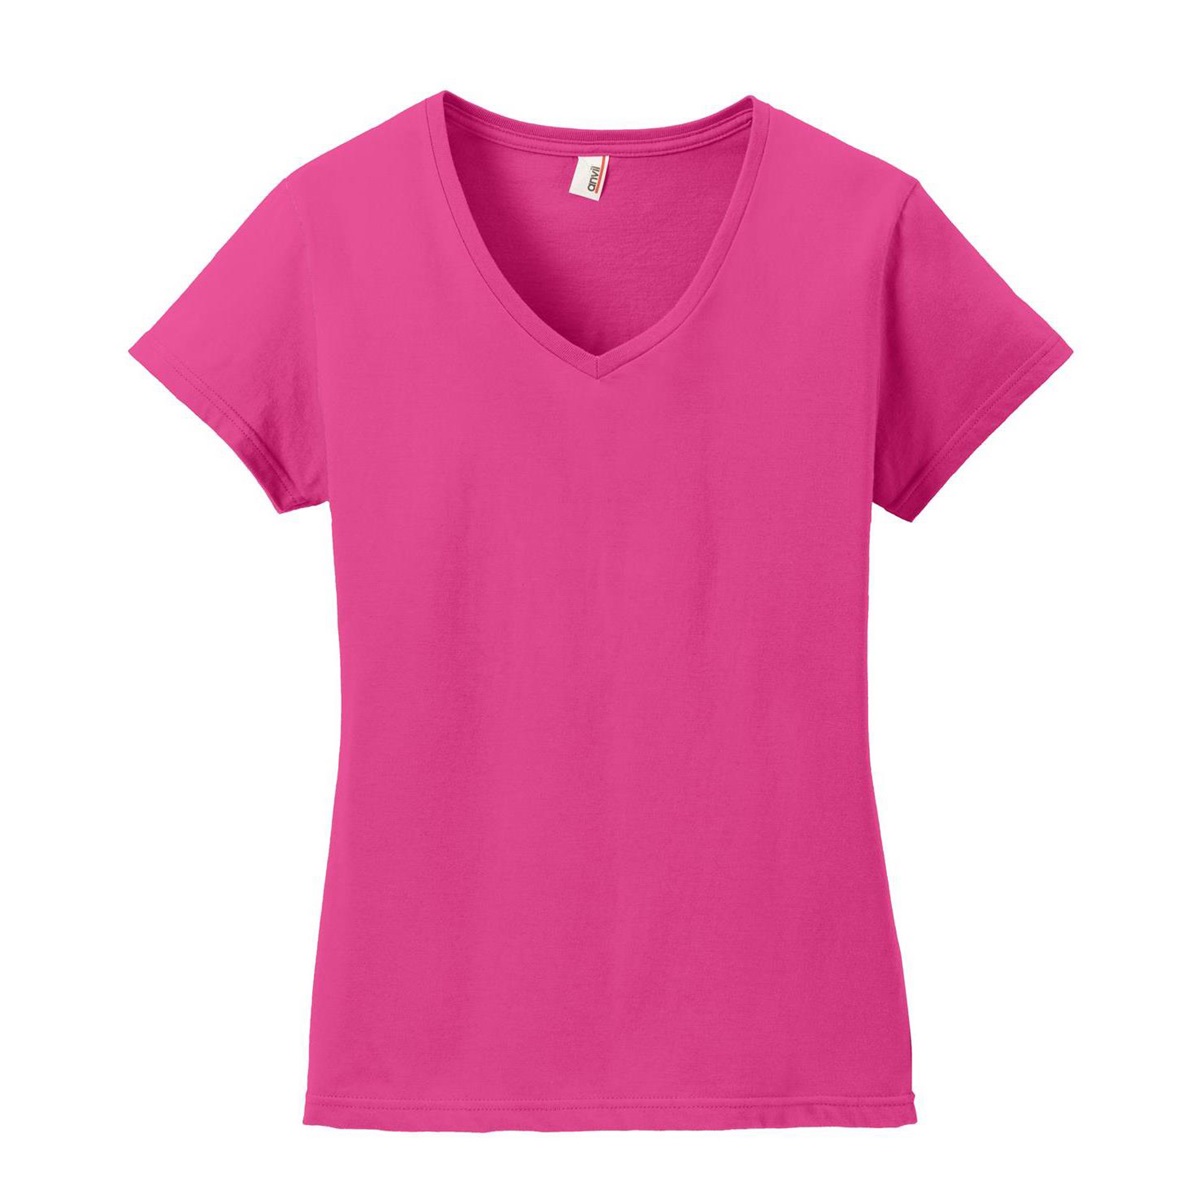 Anvil 88VL Ladies 100% Ring Spun Cotton V-Neck T-Shirt - Hot Pink ...